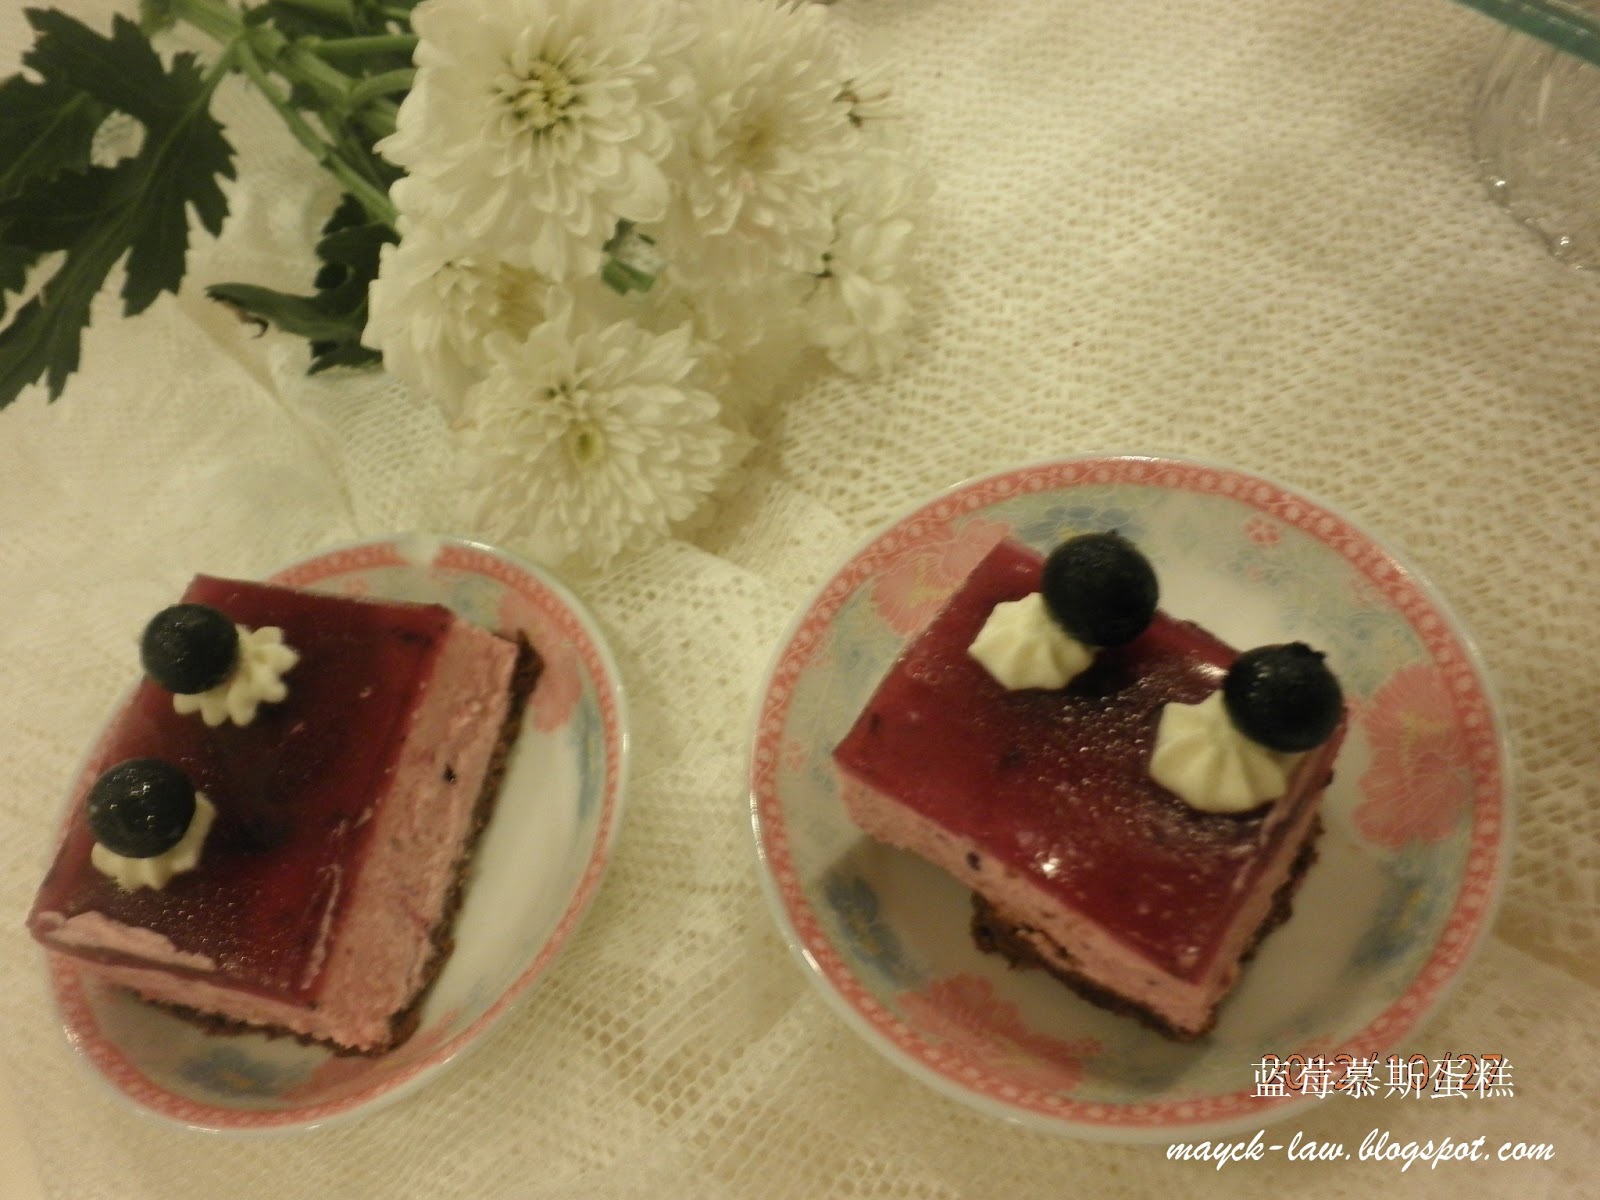 Lucky Inn: 蓝莓慕斯蛋糕 Blueberry Mousse Cake